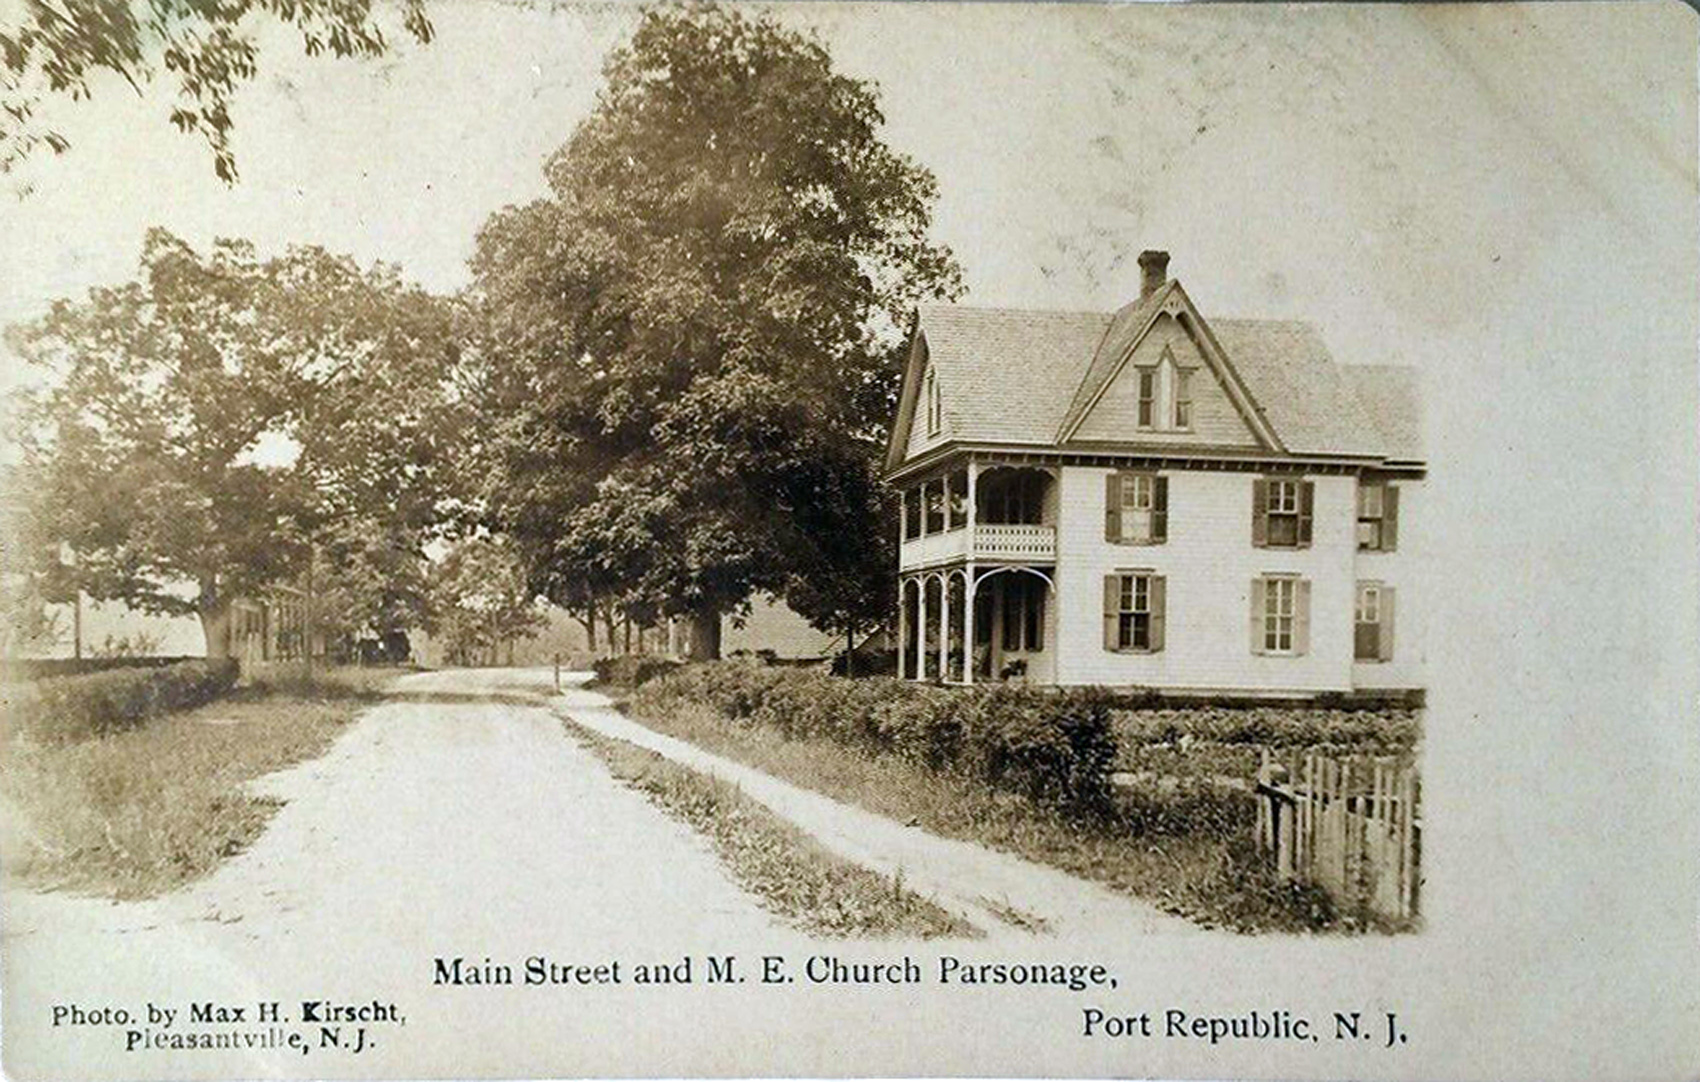 Port Republic - Main Street and Methodist Episcopal Church Parsonage - M H Kirscht - c 1910